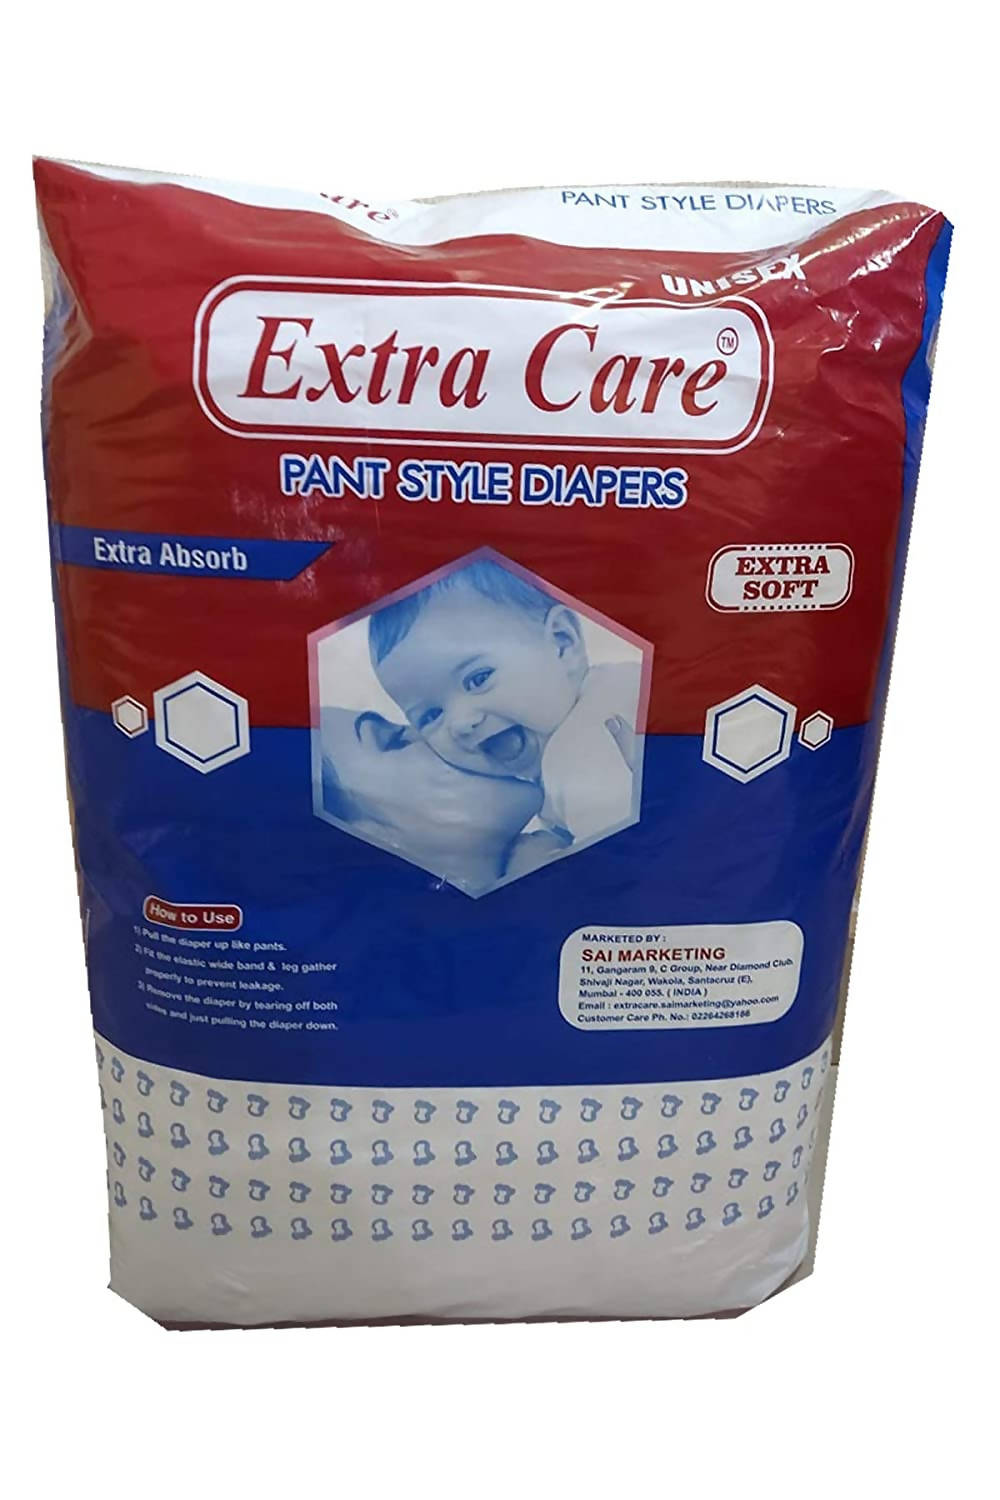 Extra Care Baby Pant Diaper XXXL size 50 piece - 18 kg & above